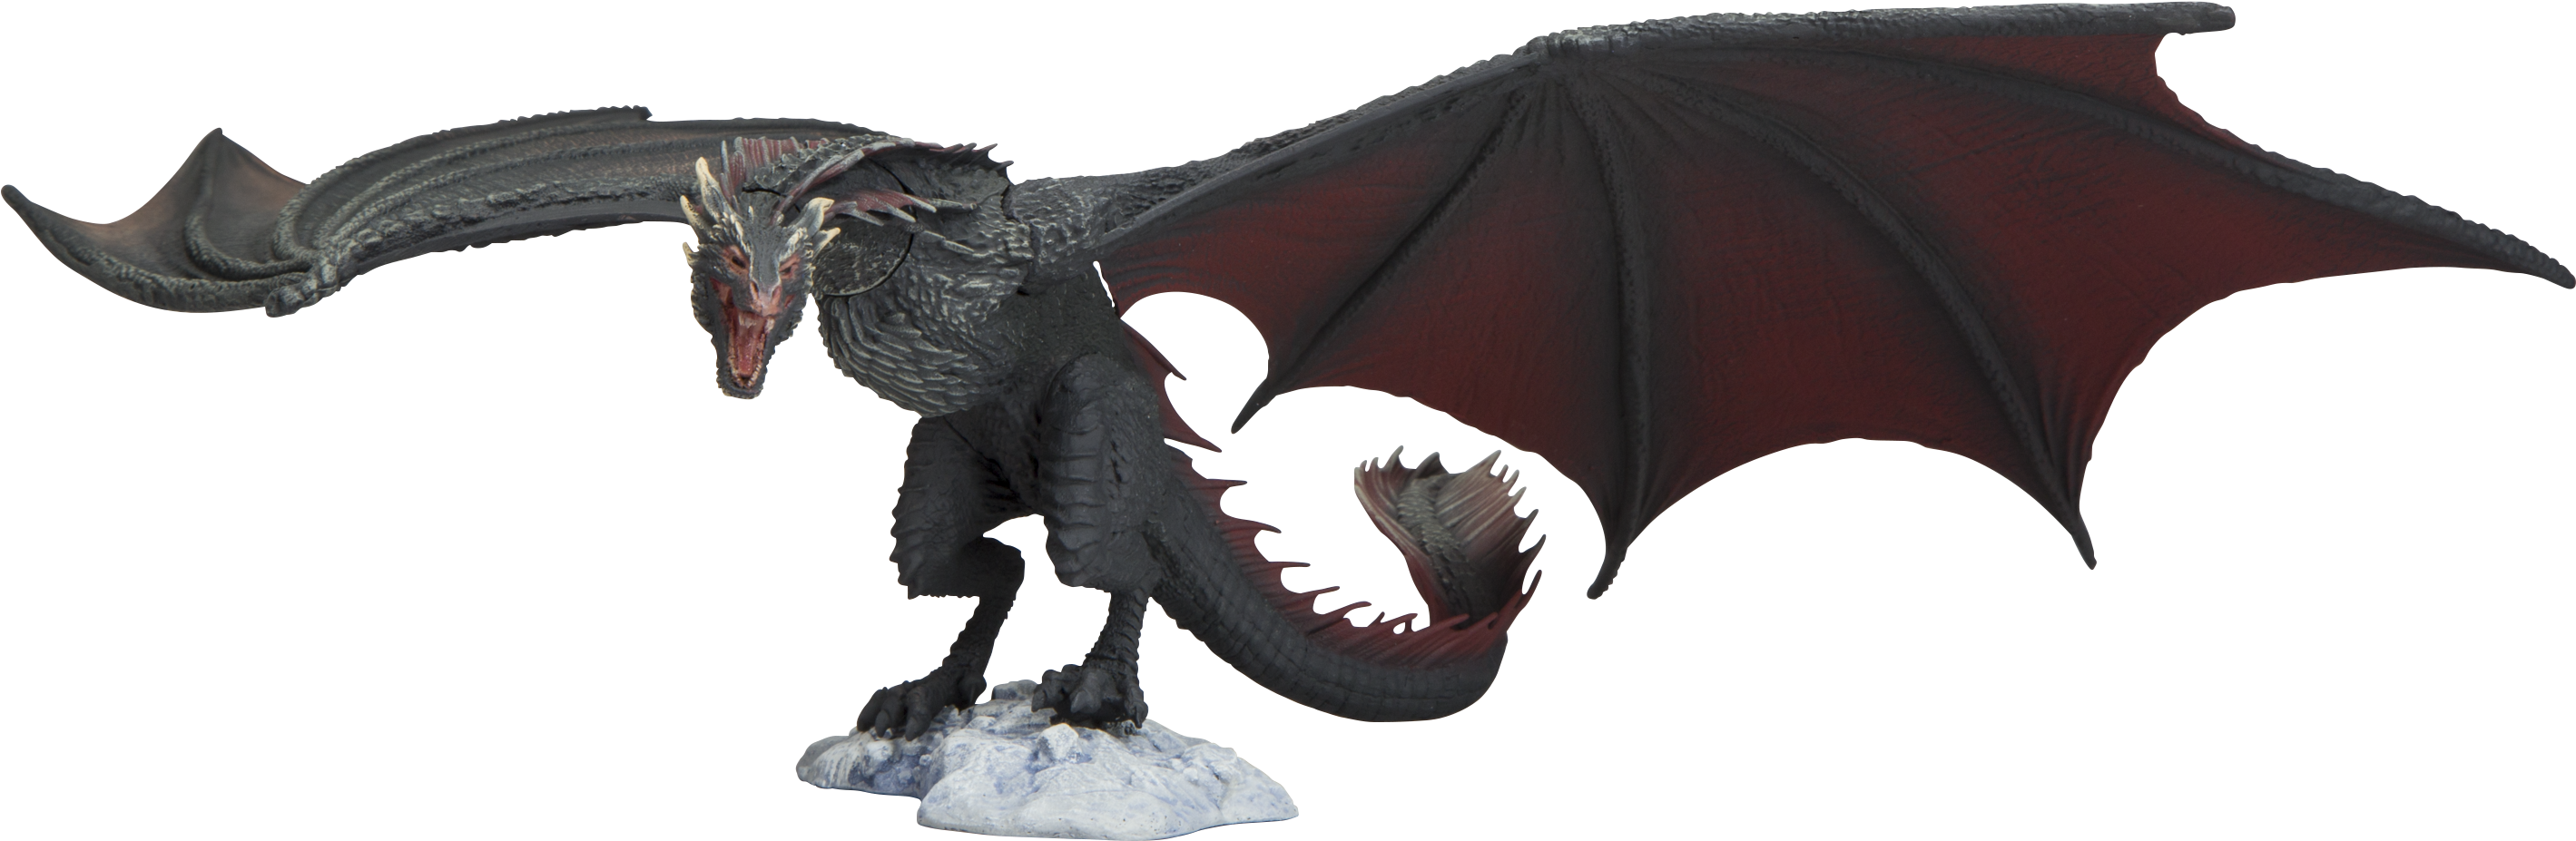 Download PNG image - Fantasy Game of Thrones Dragon Transparent Background 